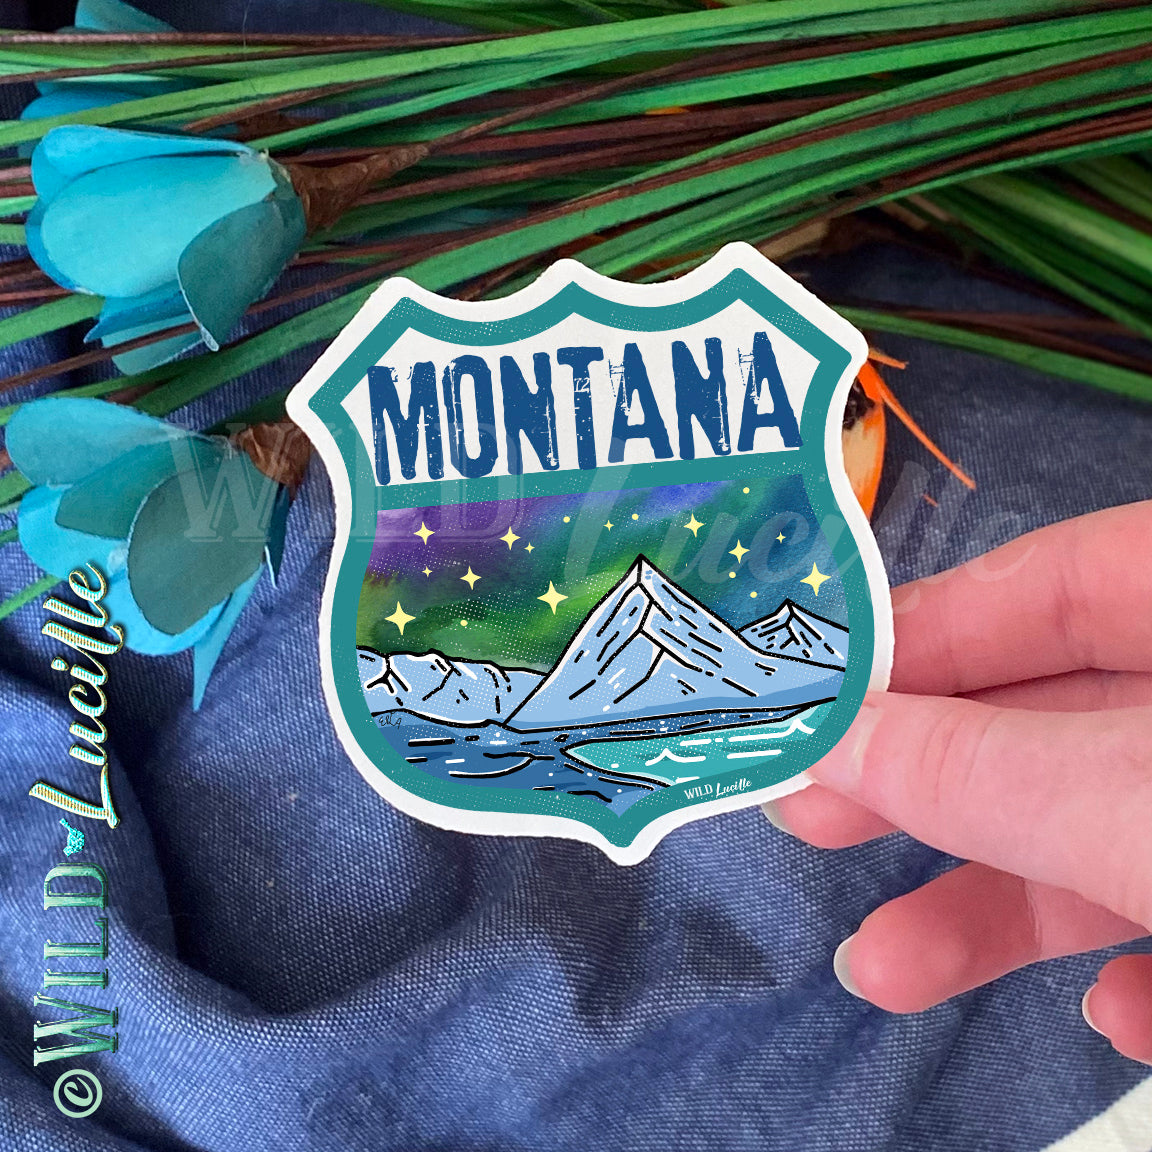 Destination Montana - Vinyl Souvenir Sticker Decals